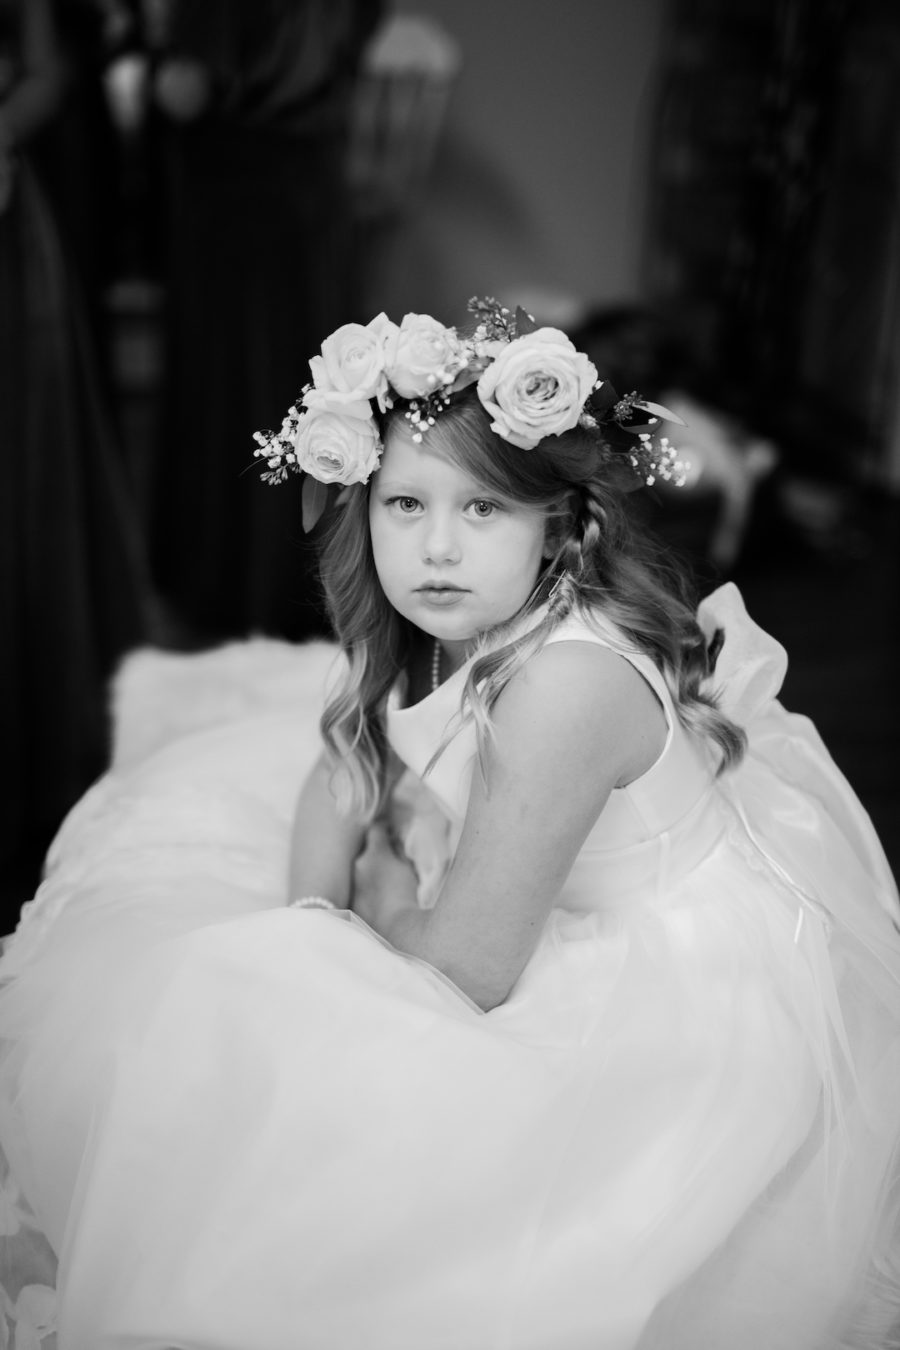 Nashville Wedding Photographer Harp & Olive Photography featured on Nashville Bride Guide